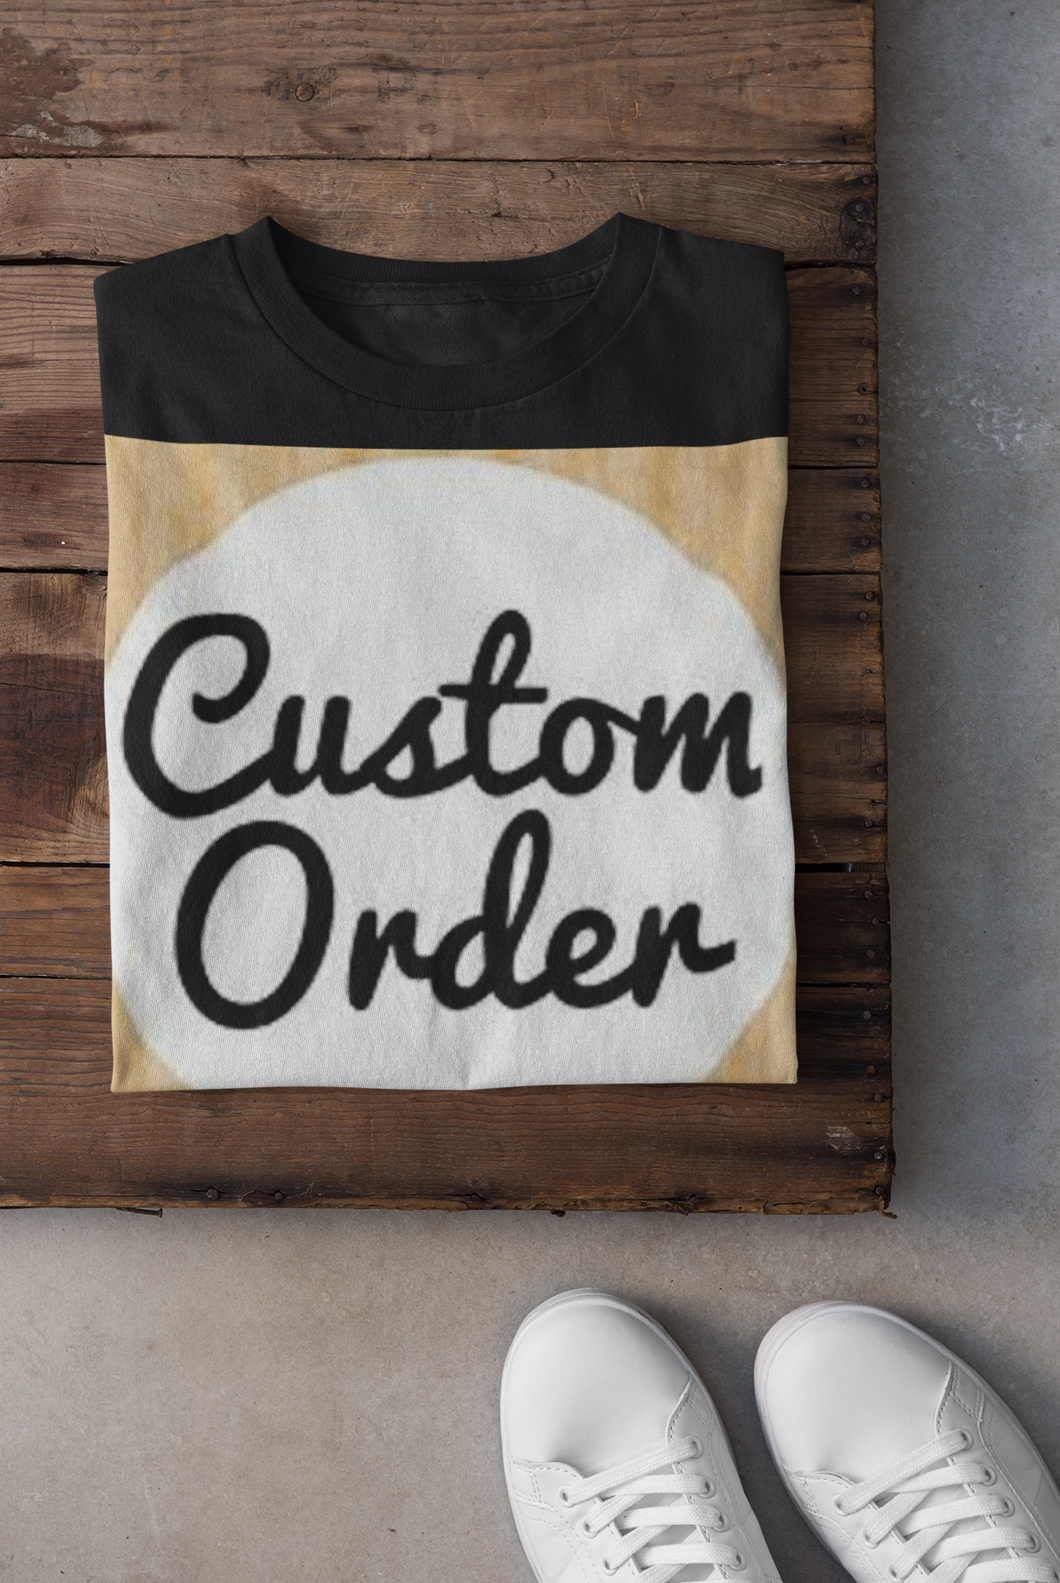 Custom Order Request